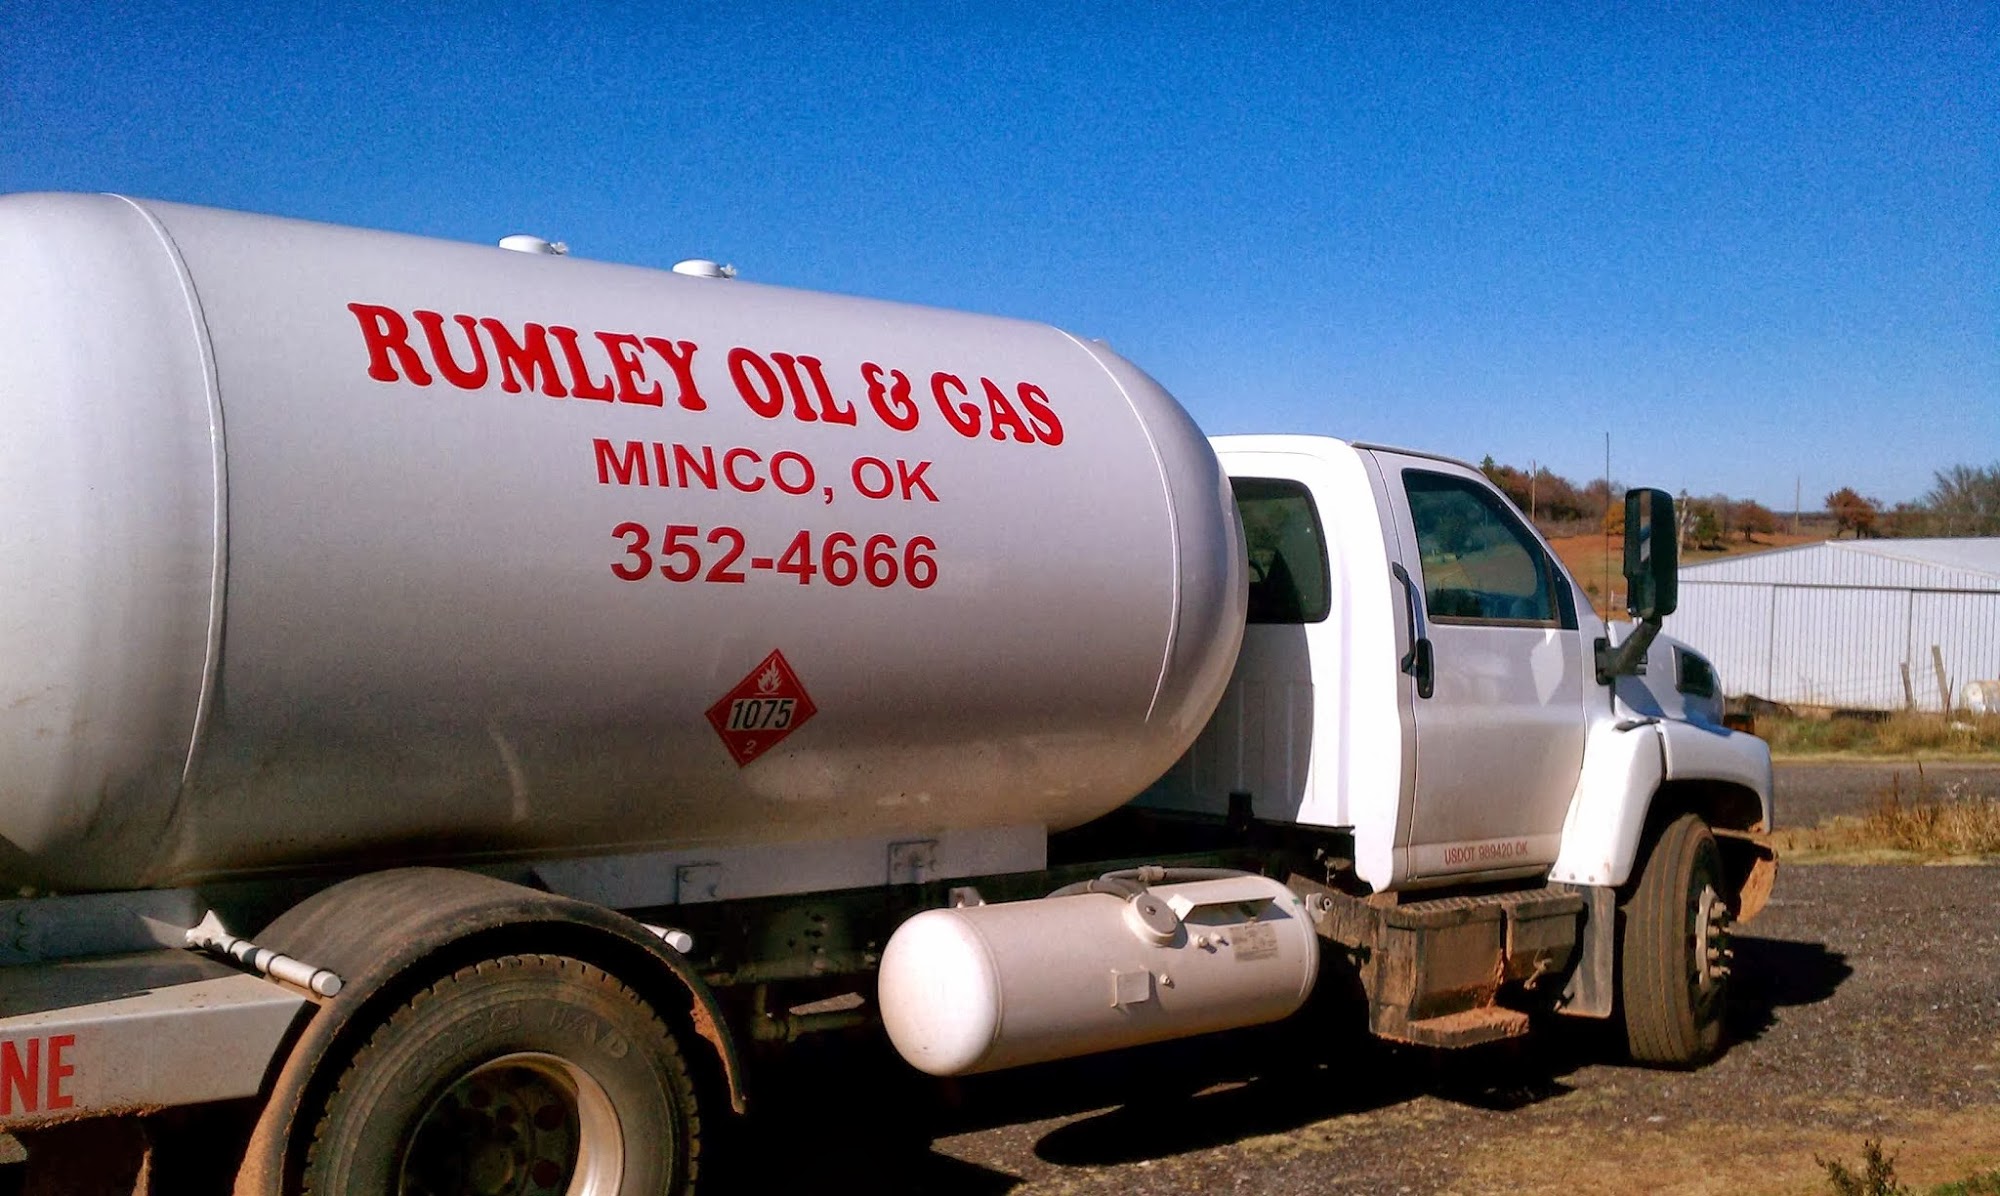 Rumley Oil & Gas